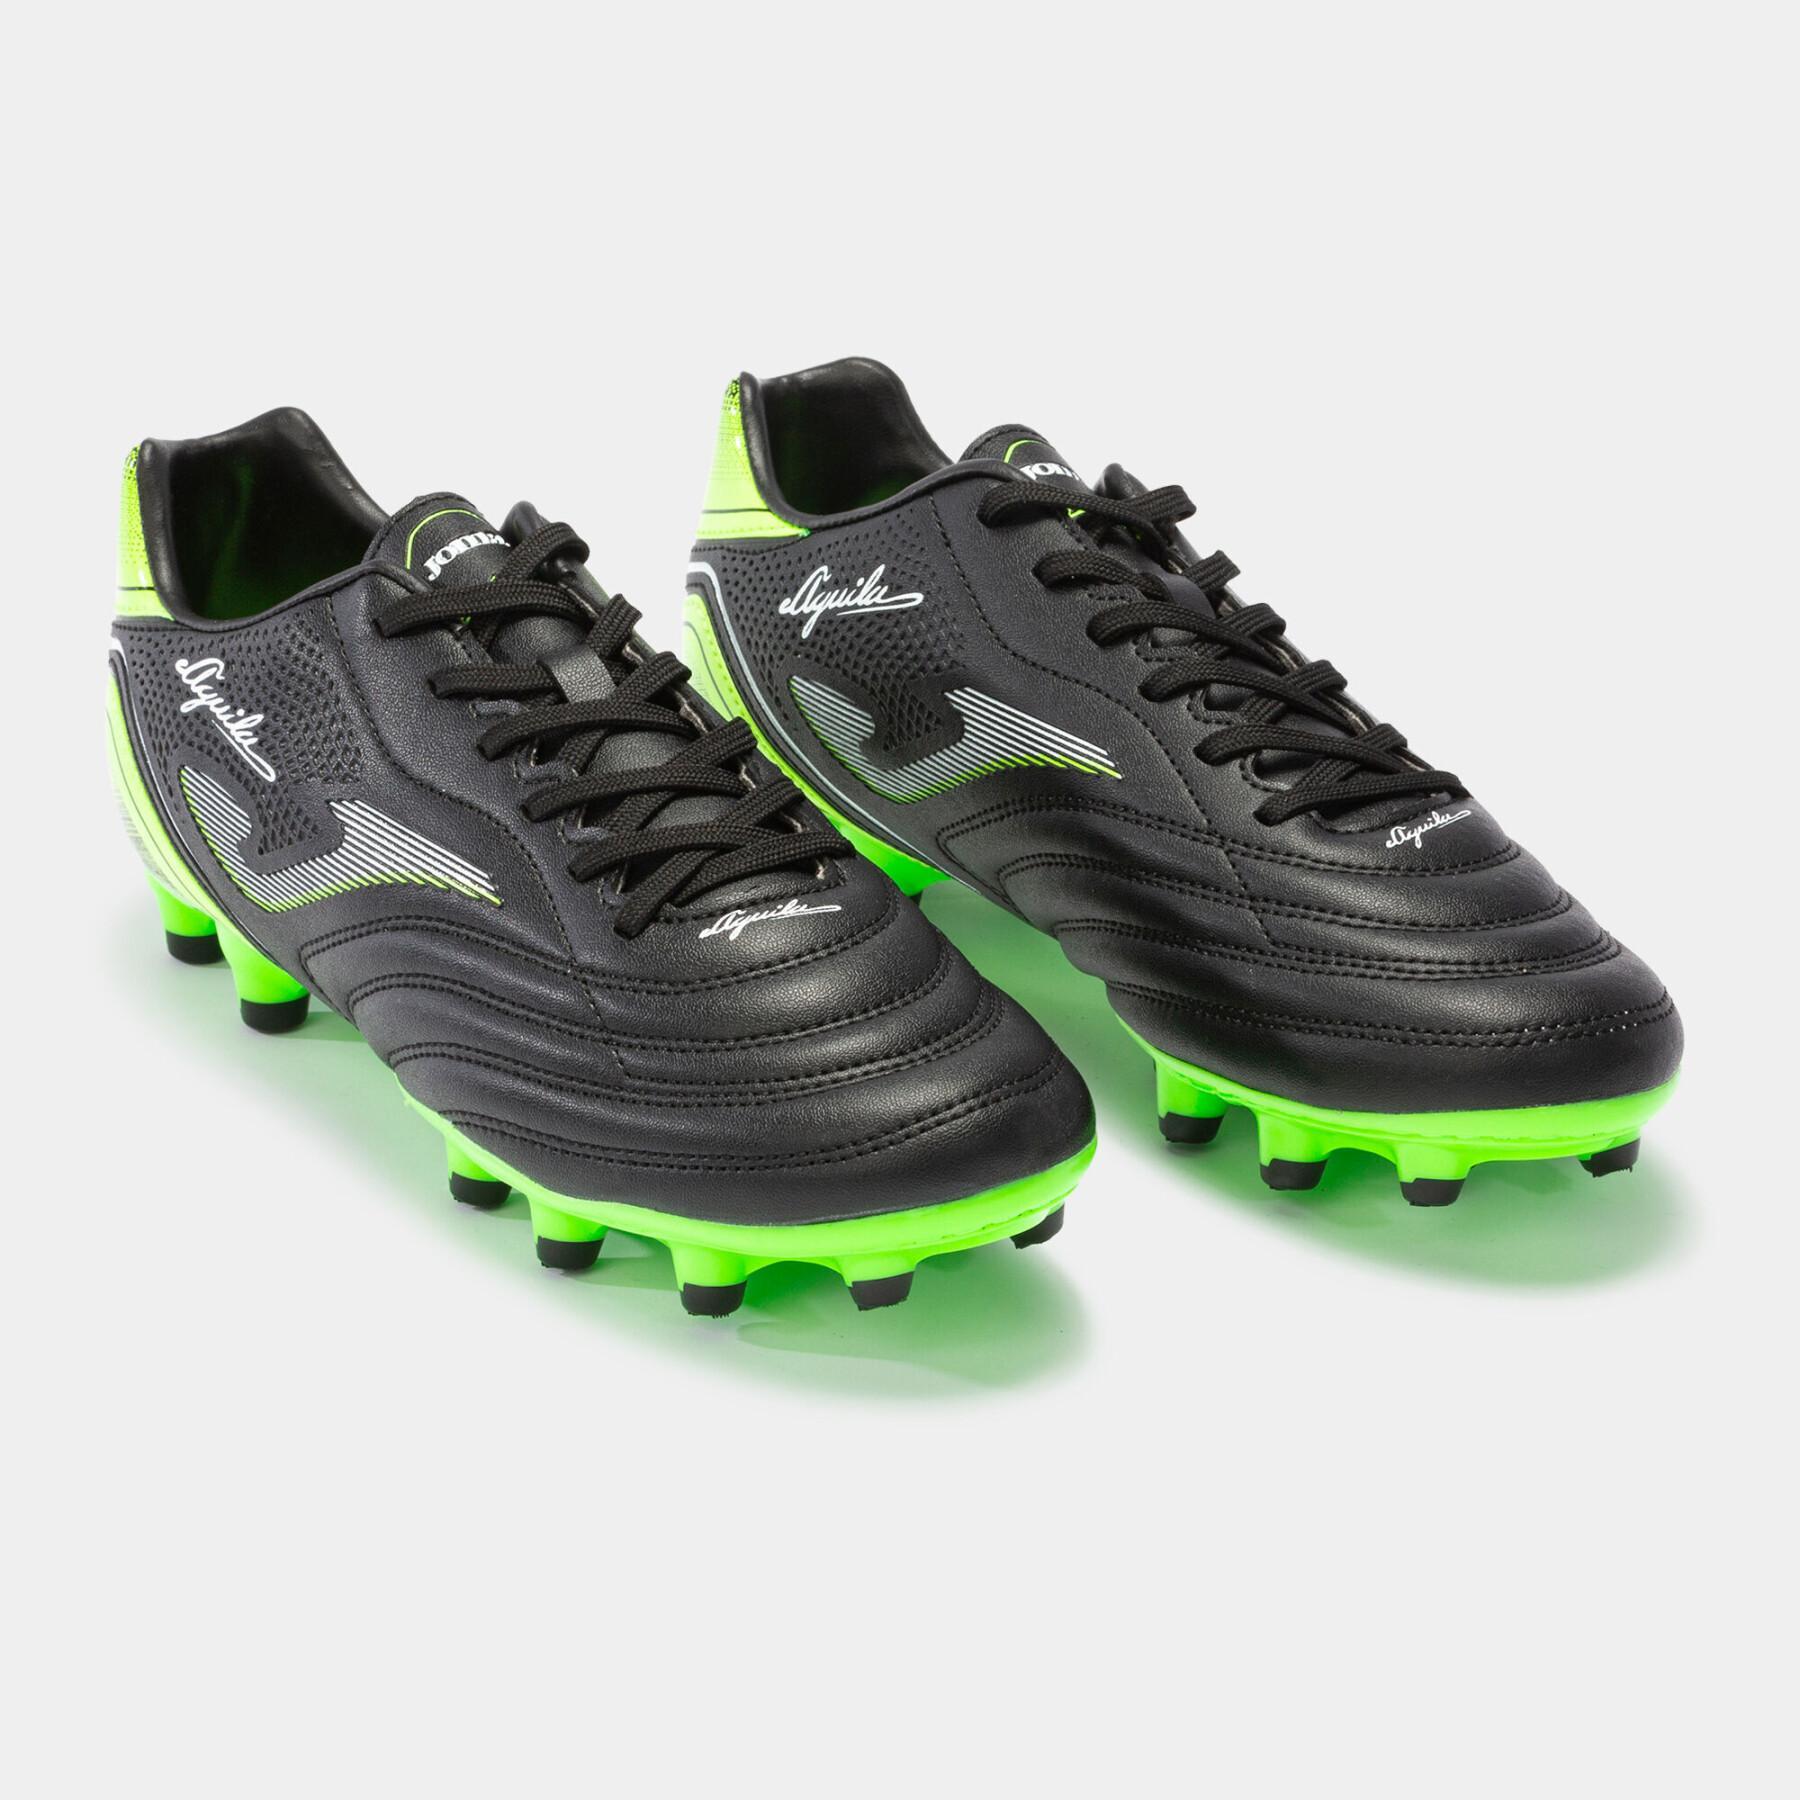 Chaussures de football terrain sec Joma Aguila 2231